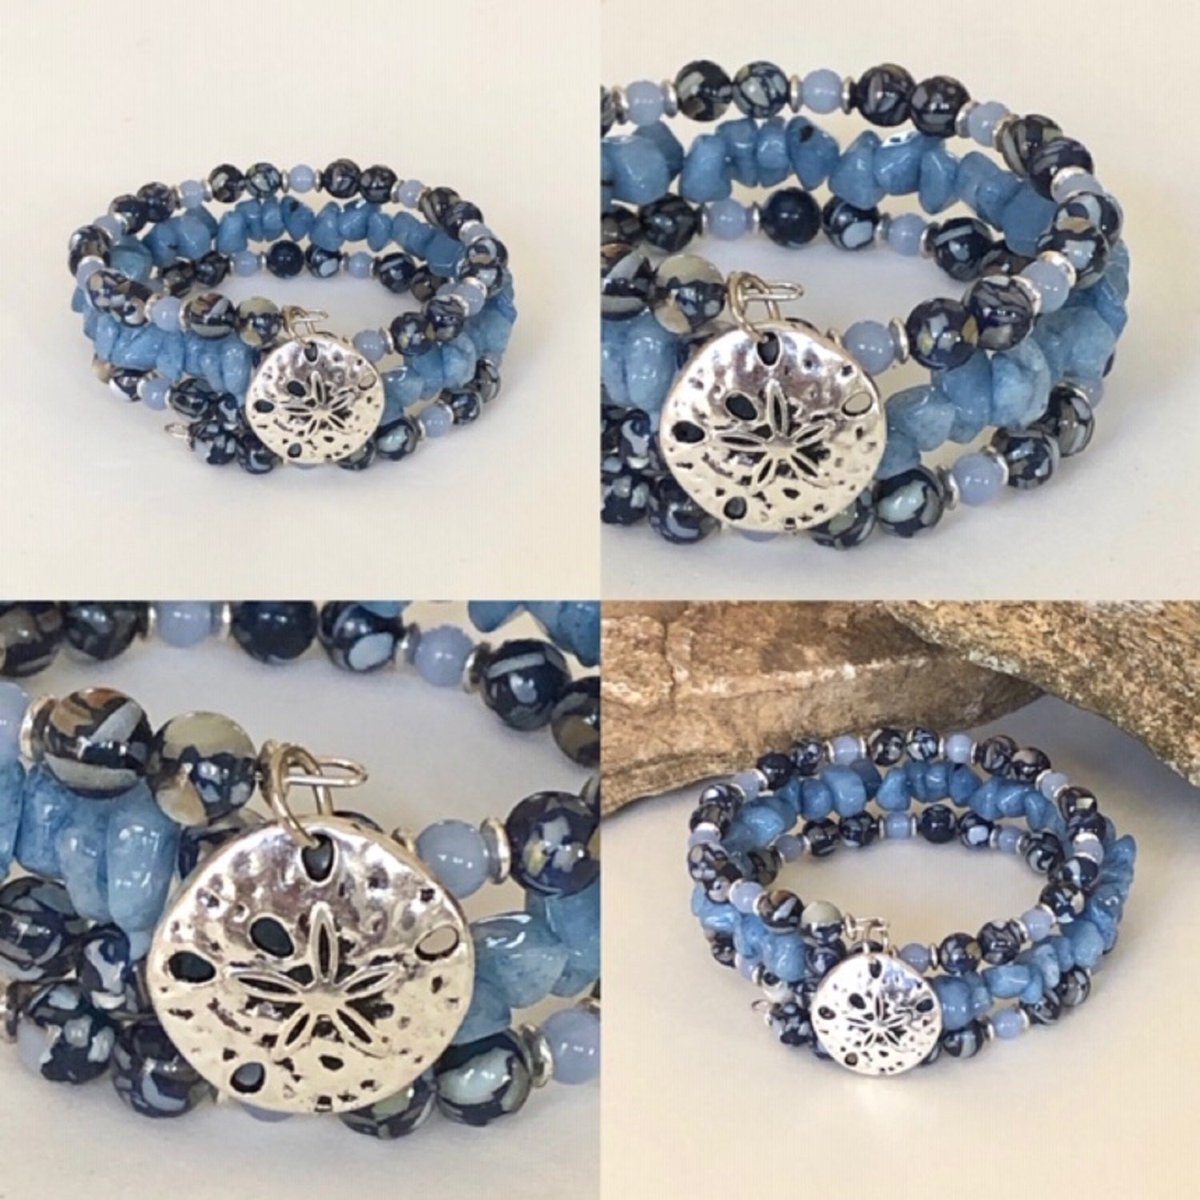 For sale in my #etsyshop: Blue Stone Wrap Bracelet etsy.me/2Gz1IoR #bracelets #beadedbracelet #bluebracelet #wrapbracelet #cuffbracelet #memorywire #coiled #bangle #spiral #wraparound #stacked #layered #armcandy #wriststyle #braceletstyle #boho #bohemian #gypsy